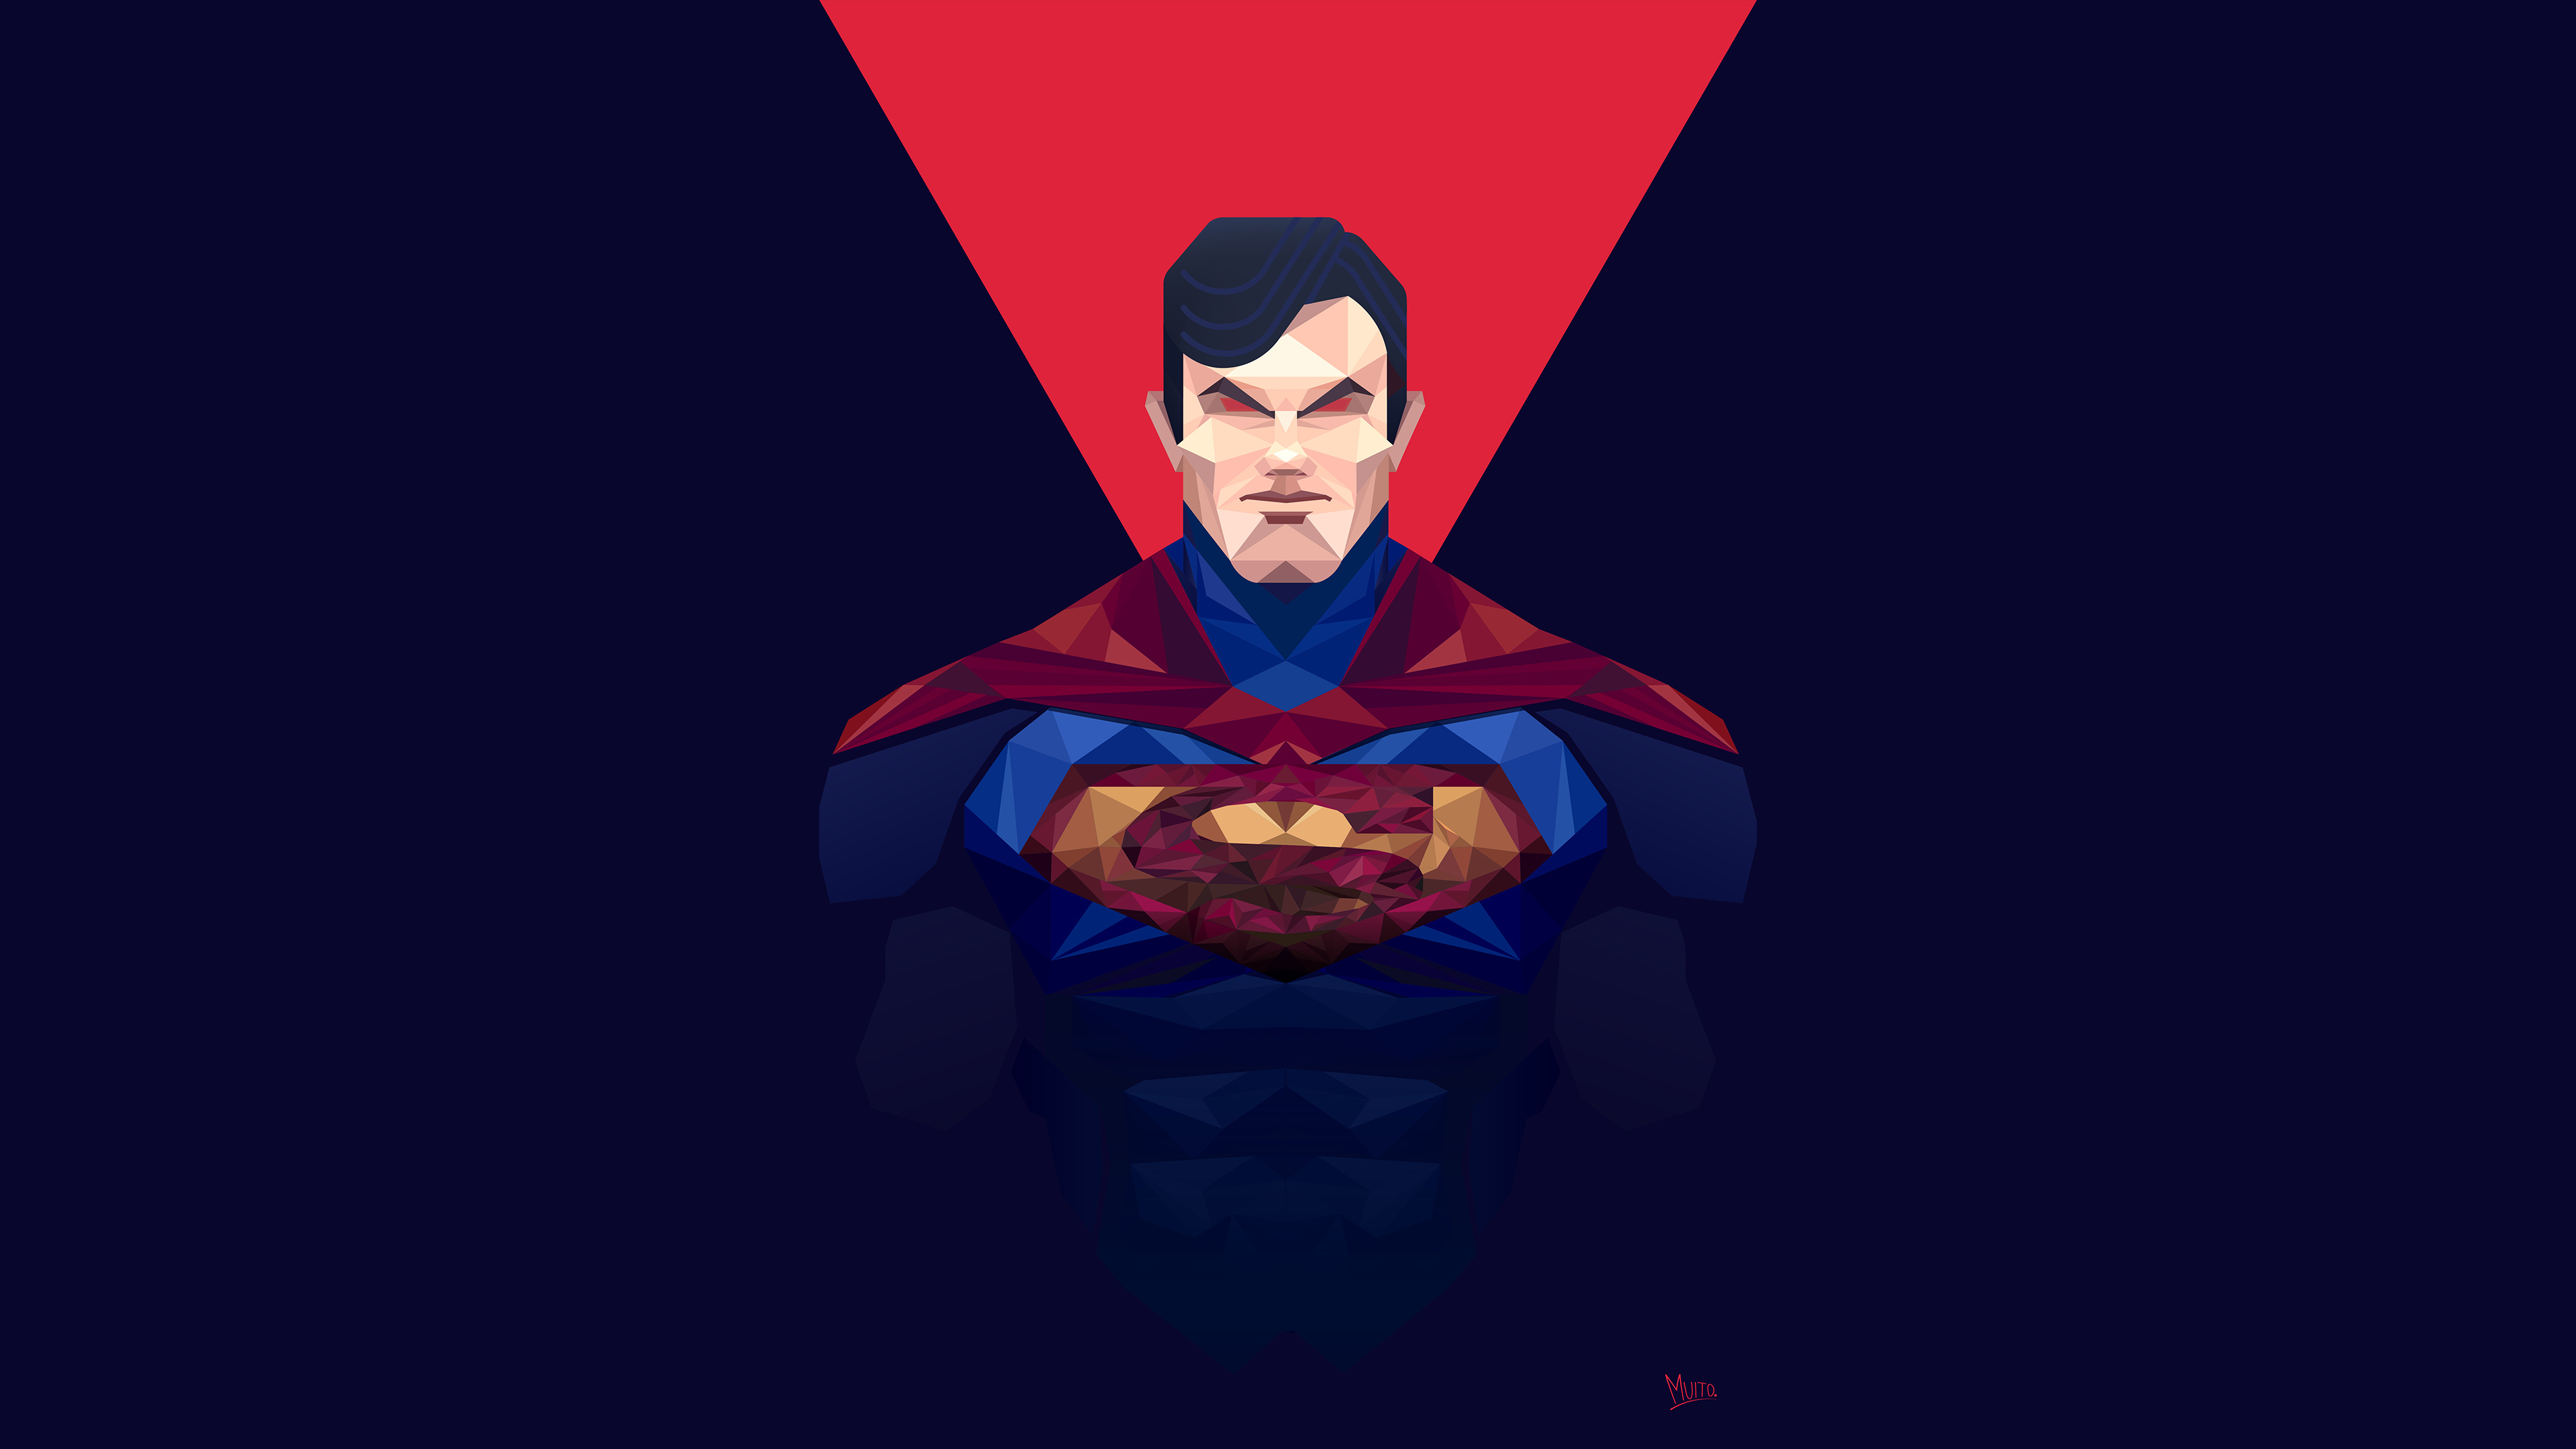 General 3840x2160 minimalism Superman Man of Steel superhero cape low poly digital art simple background